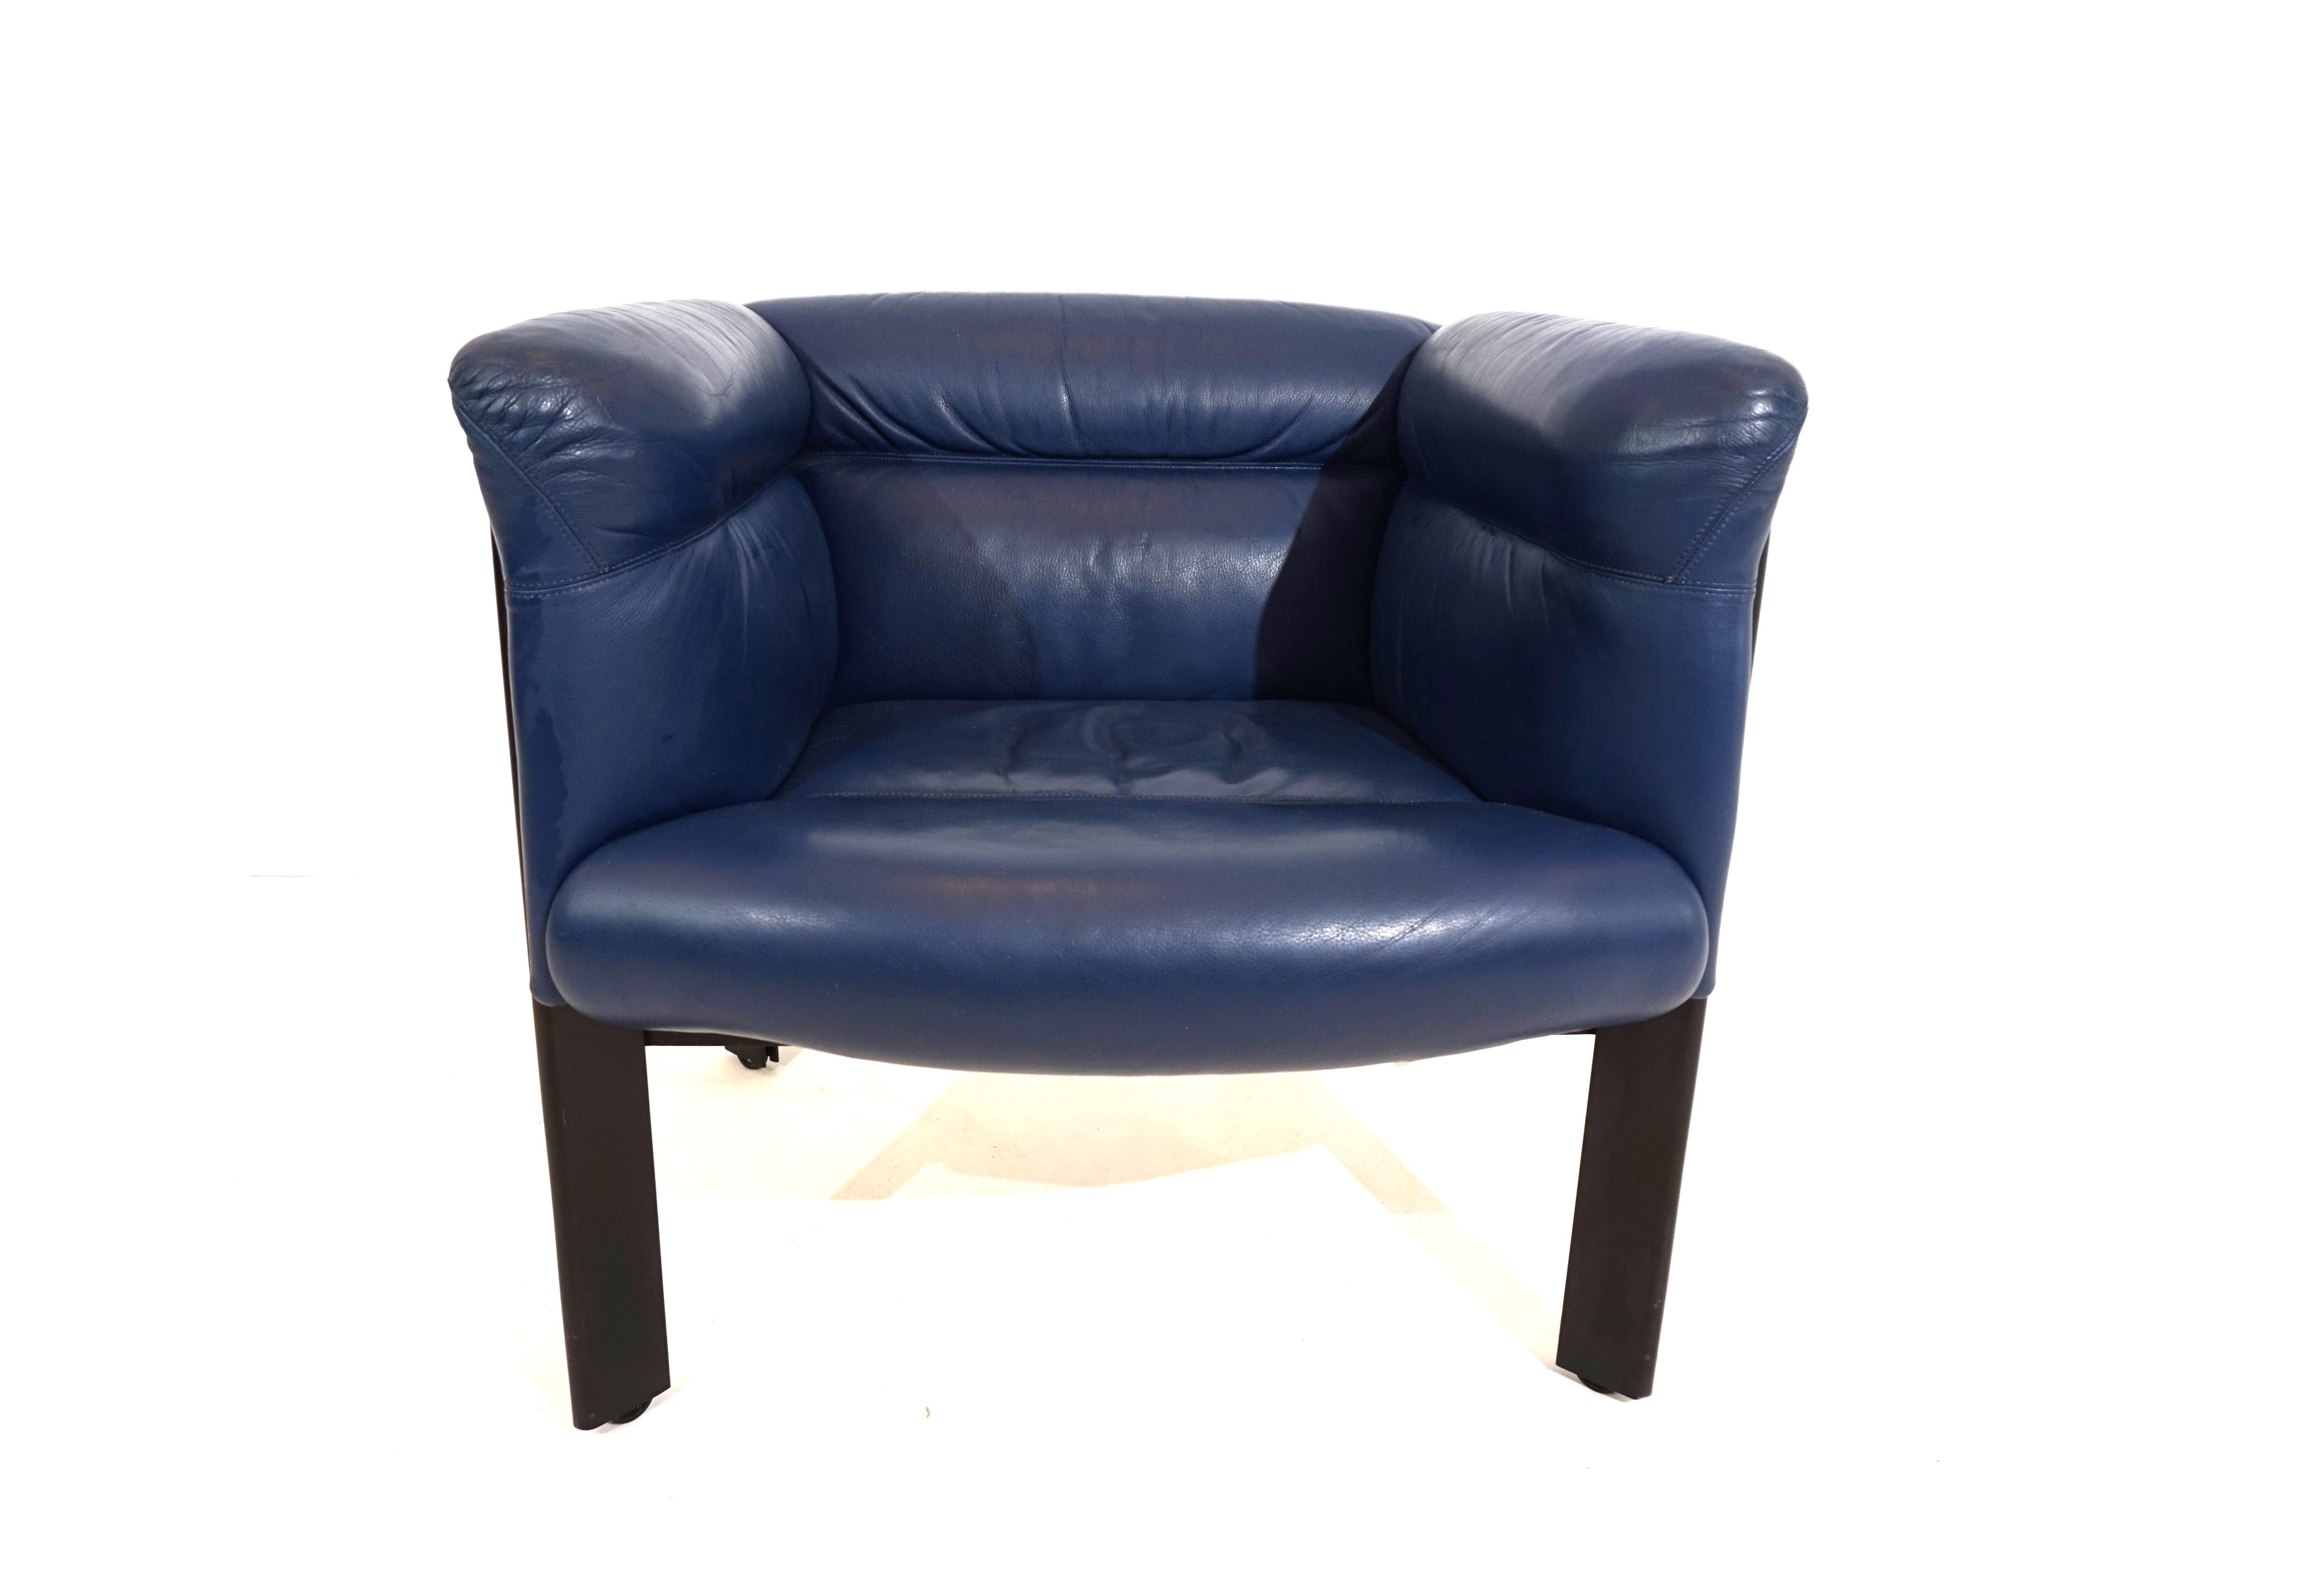 Poltrona Frau Interlude leather armchair by Marco Zanuso For Sale 10